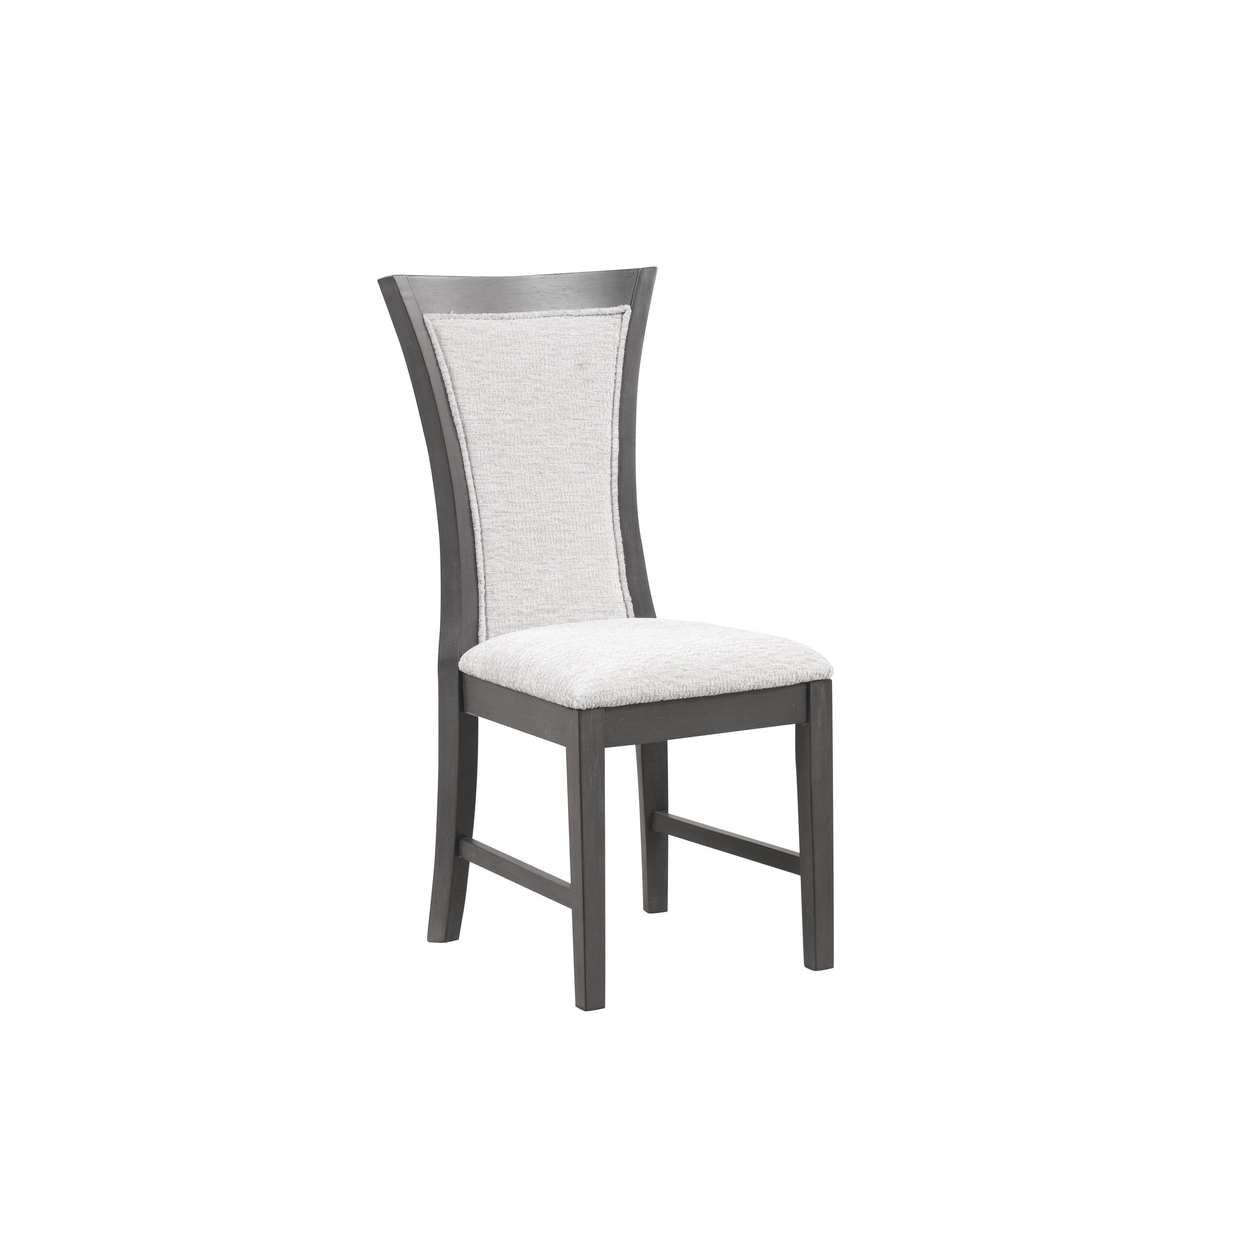 Flin 17 Inch Set Of 2 Dining Chairs, Flared Backrest, Gray Wood, Fabric - Saltoro Sherpi